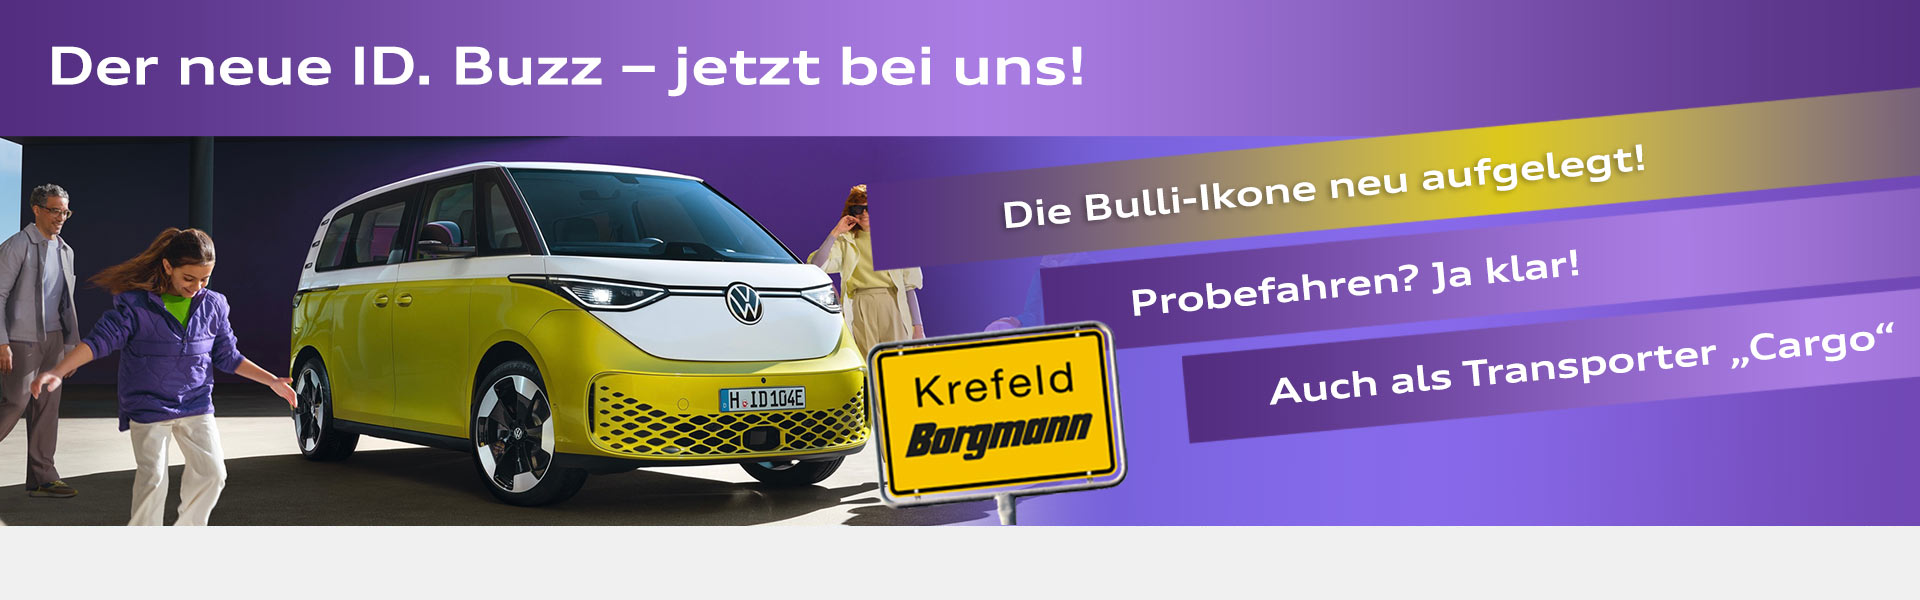 Der neue VW ID. Buzz im Autohaus Borgmann Krefeld